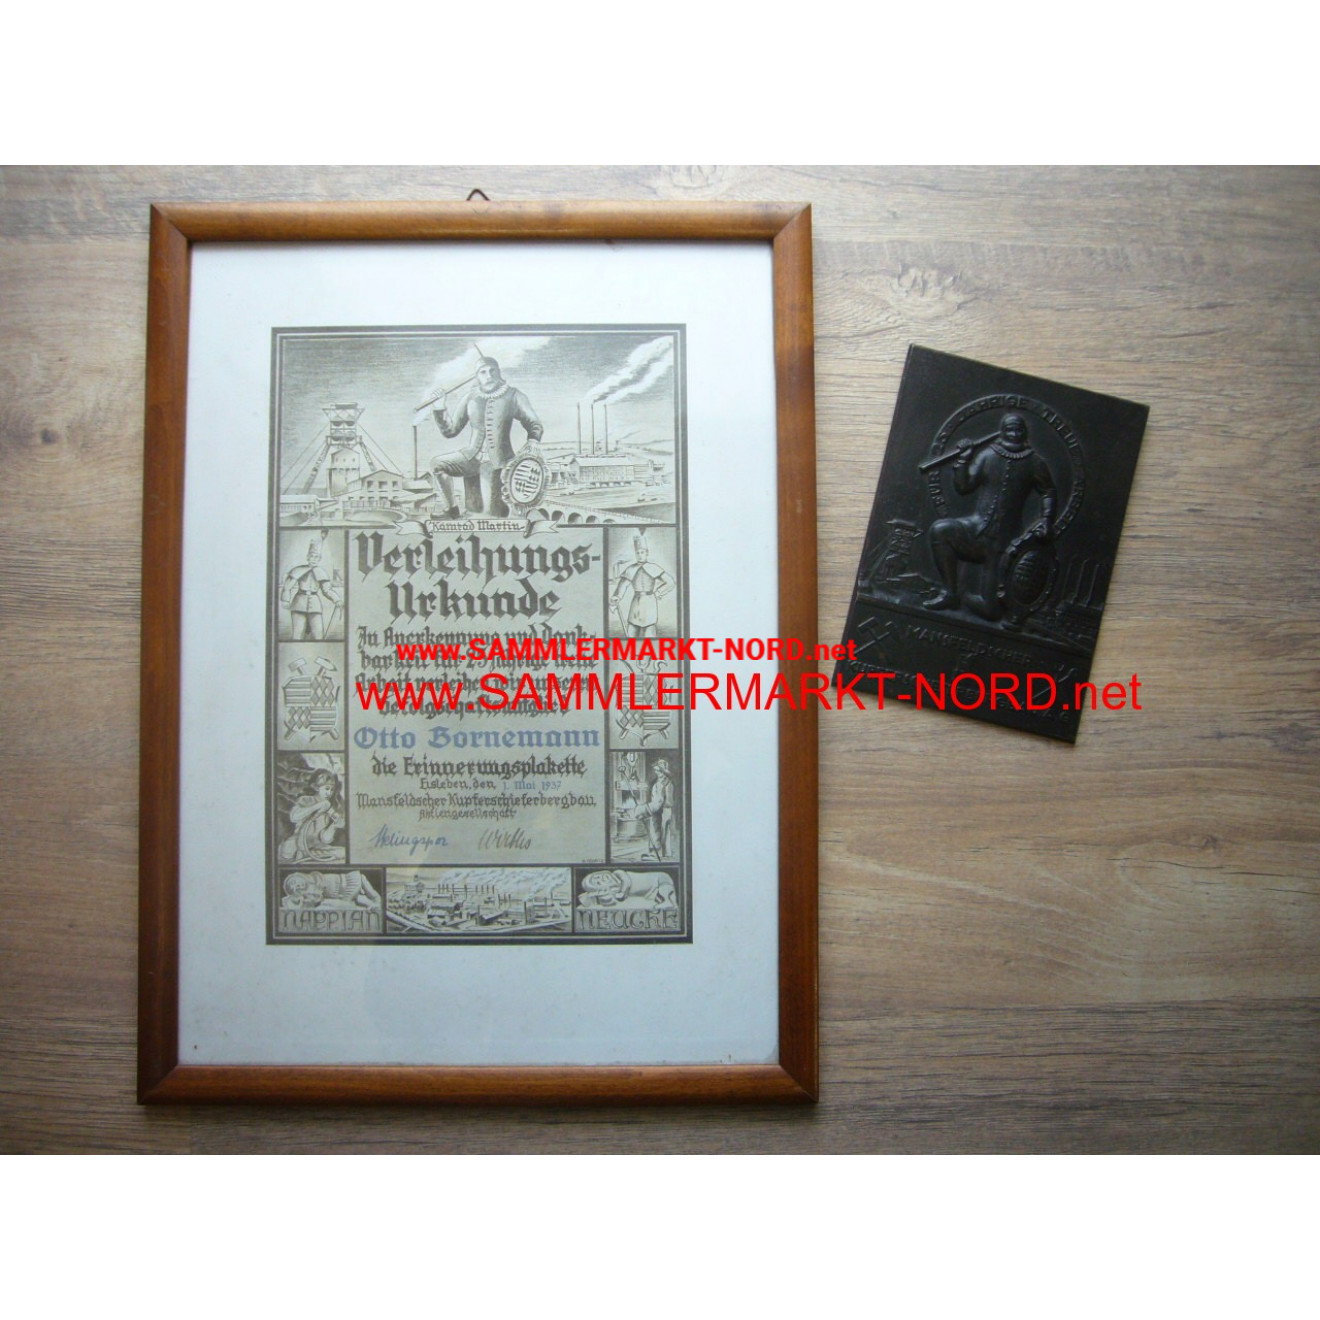 Mansfelder Bergbau AG - Certificate & plaque 1937